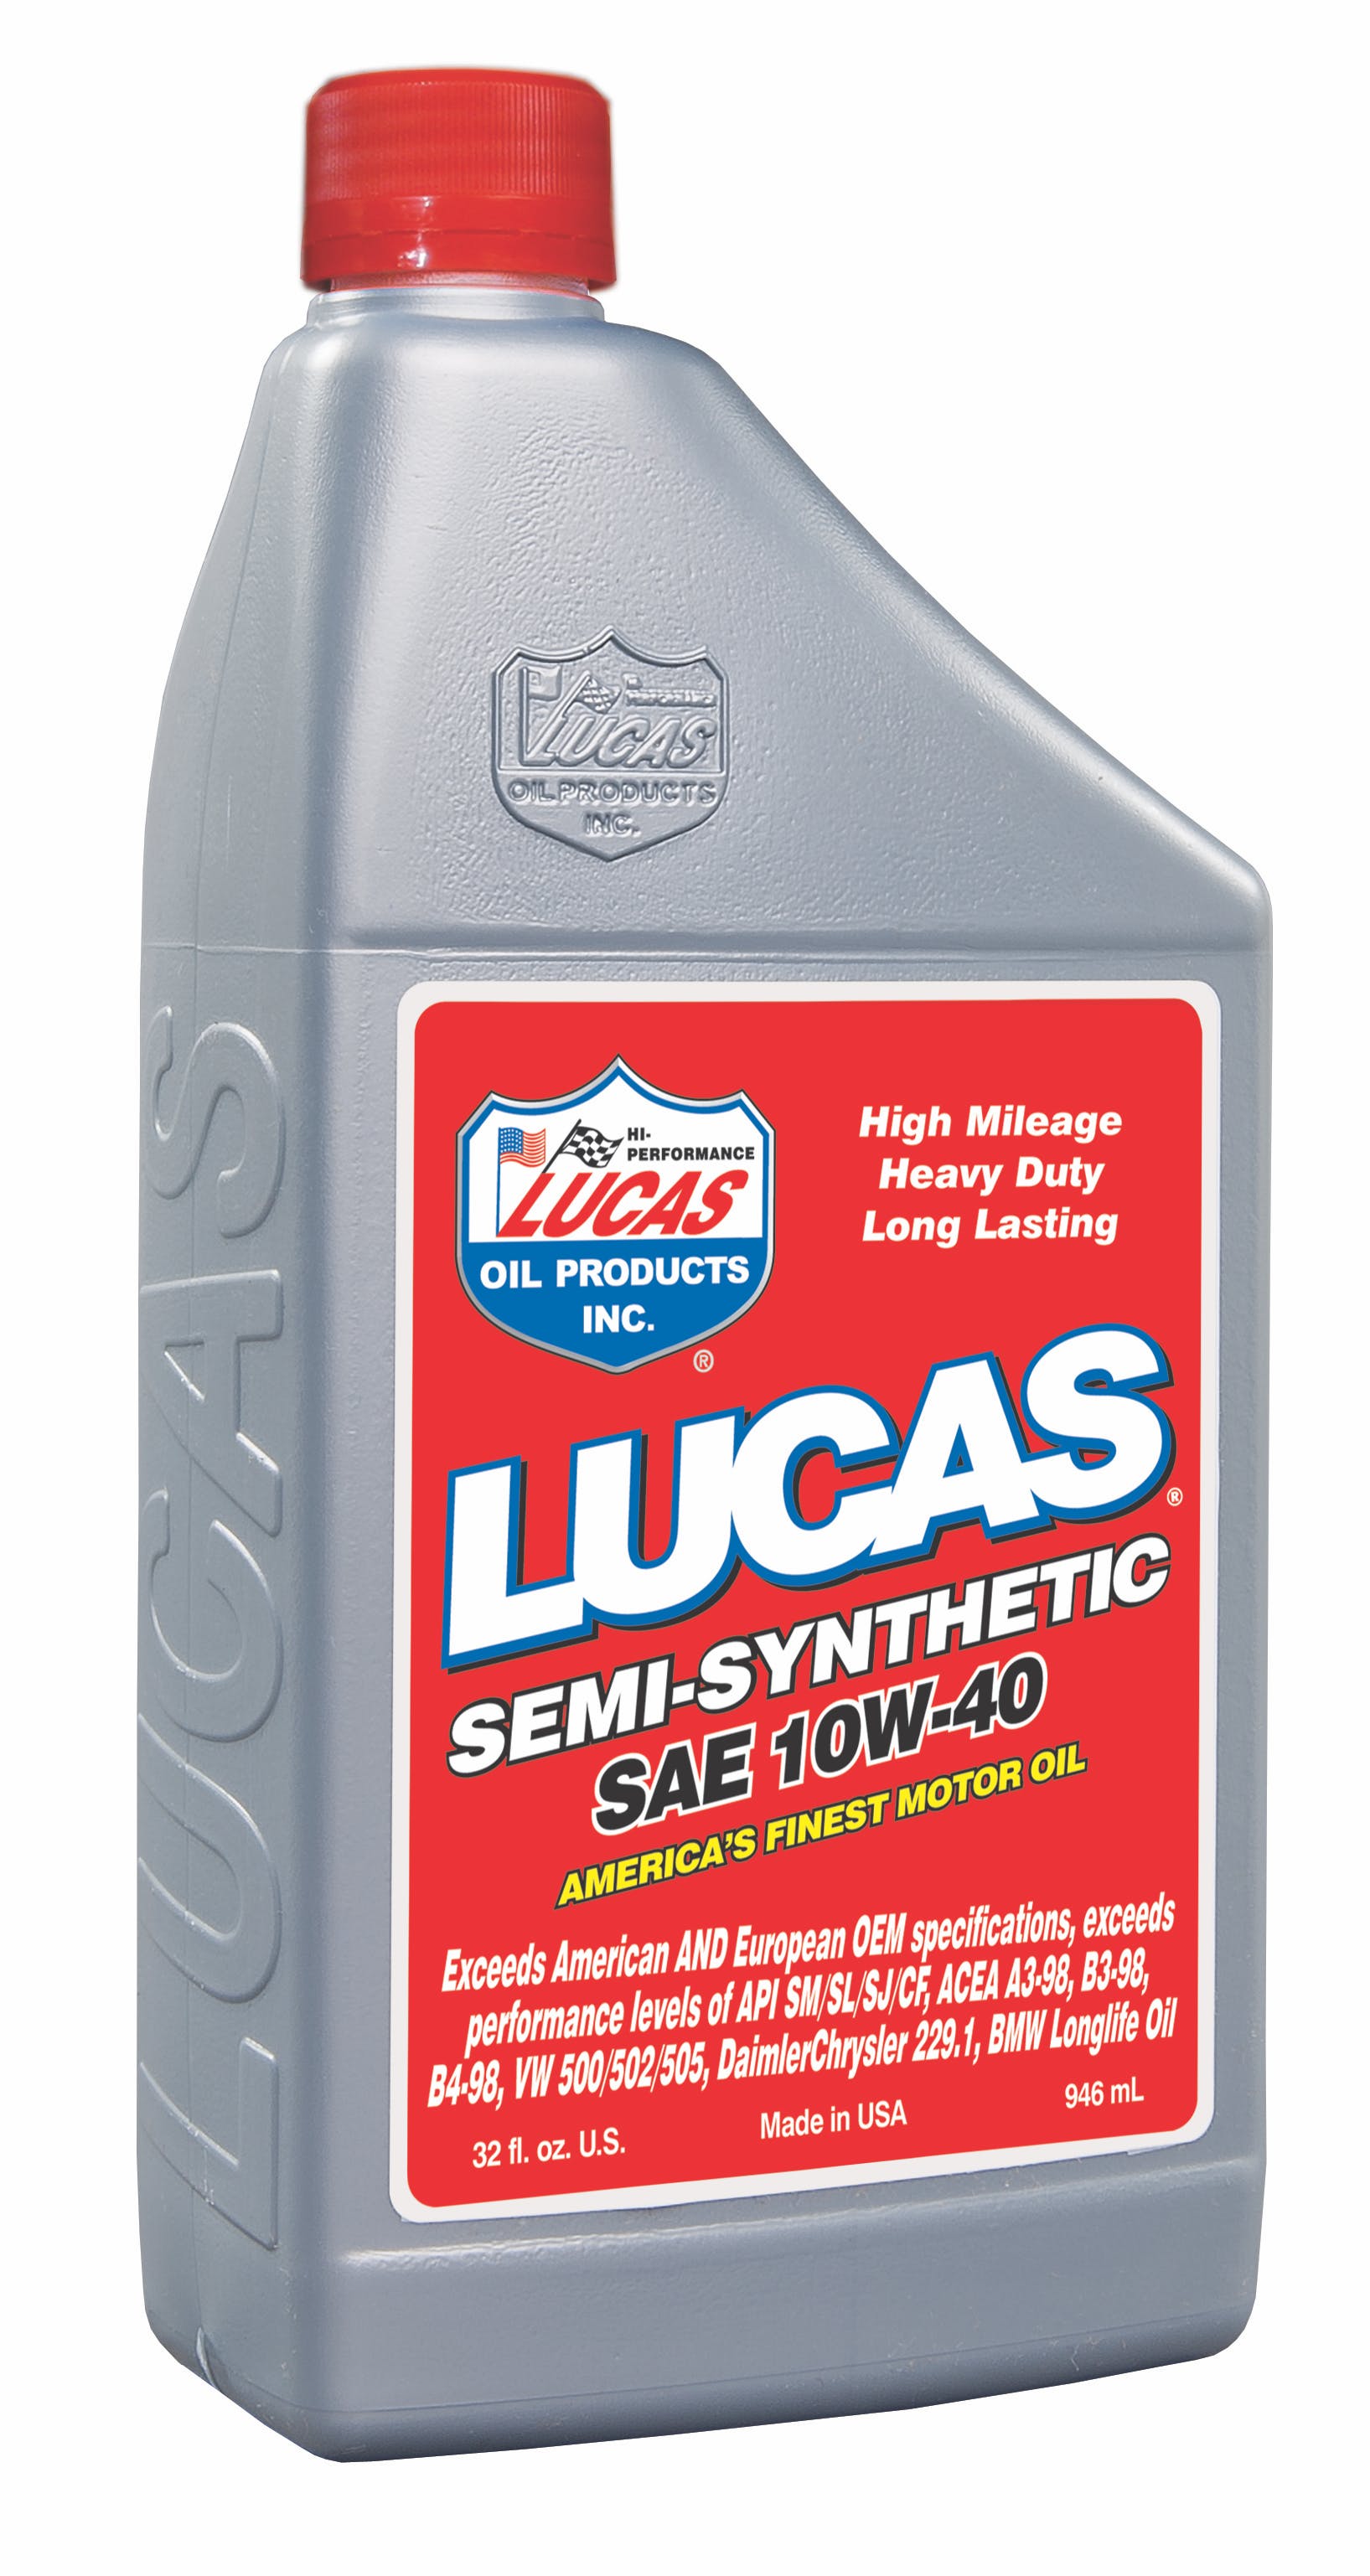 Lucas OIL Semi-Synthetic SAE 10W-40 Motor Oil 10176